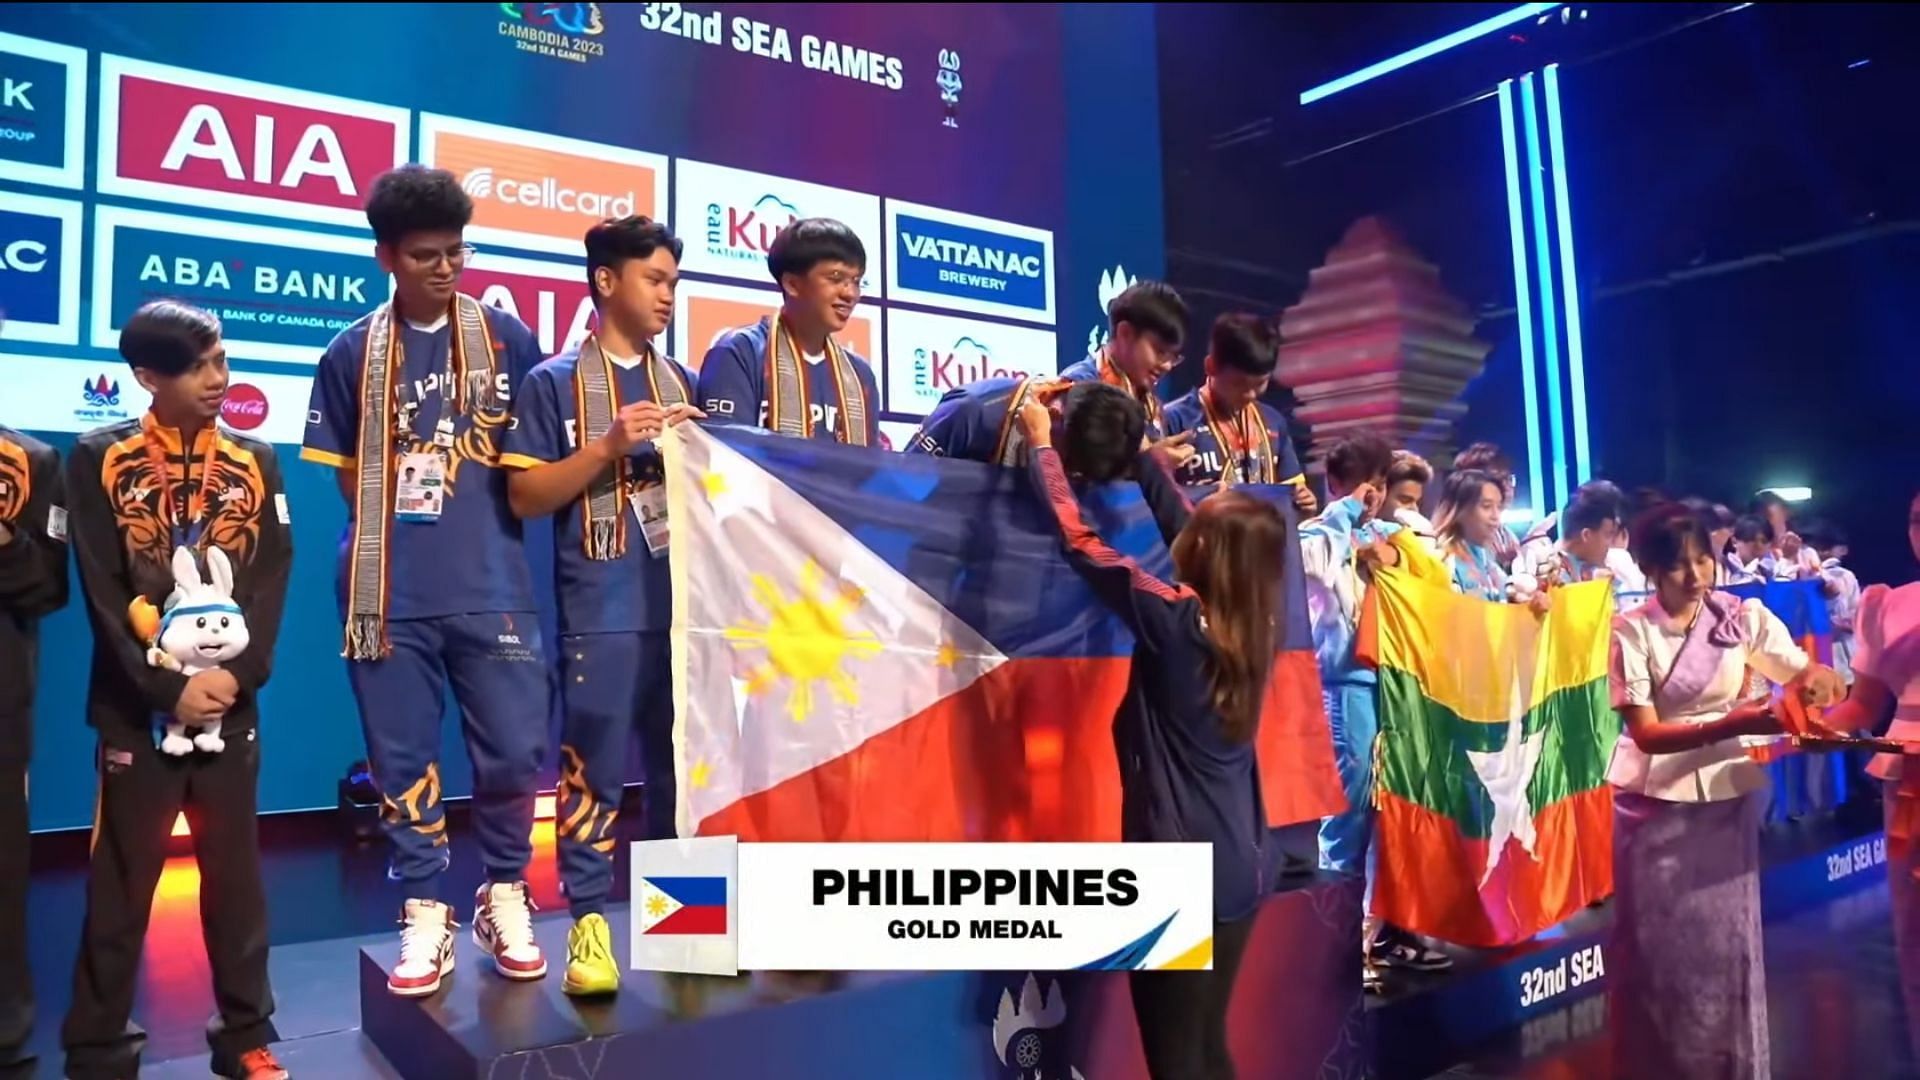 The Philippines wins gold medal at 32SEA Games MLBB (Image via Moonton)